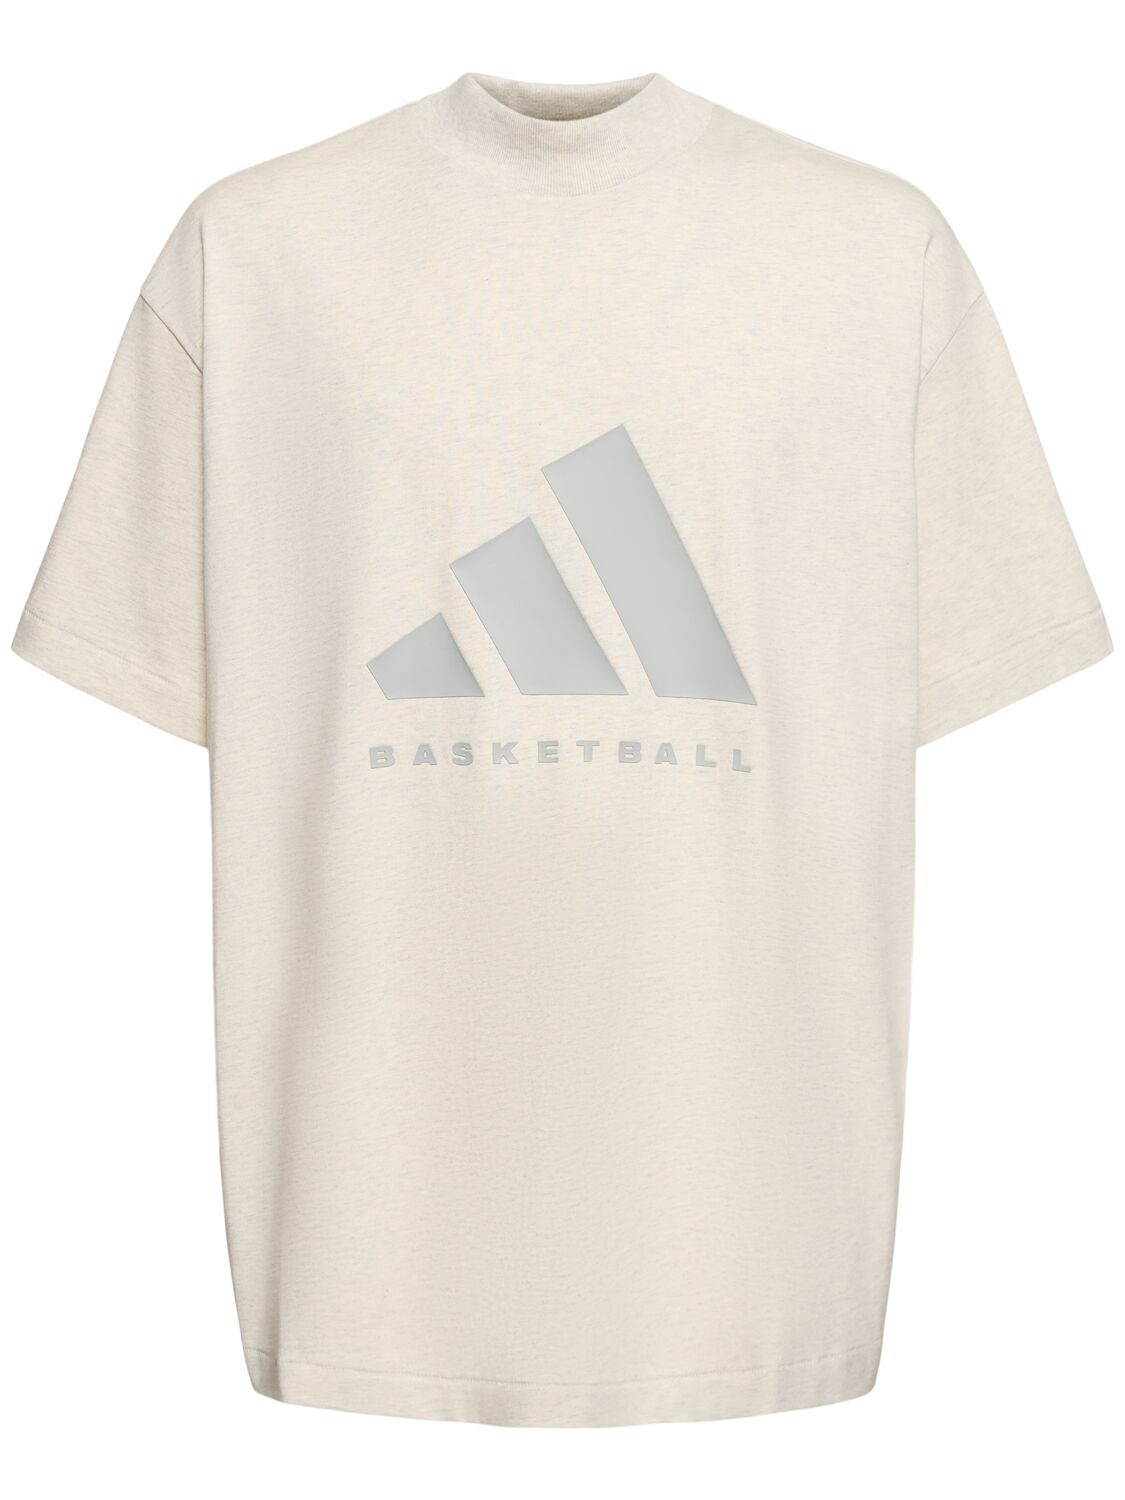 Image of One Basketball Jersey T-shirt